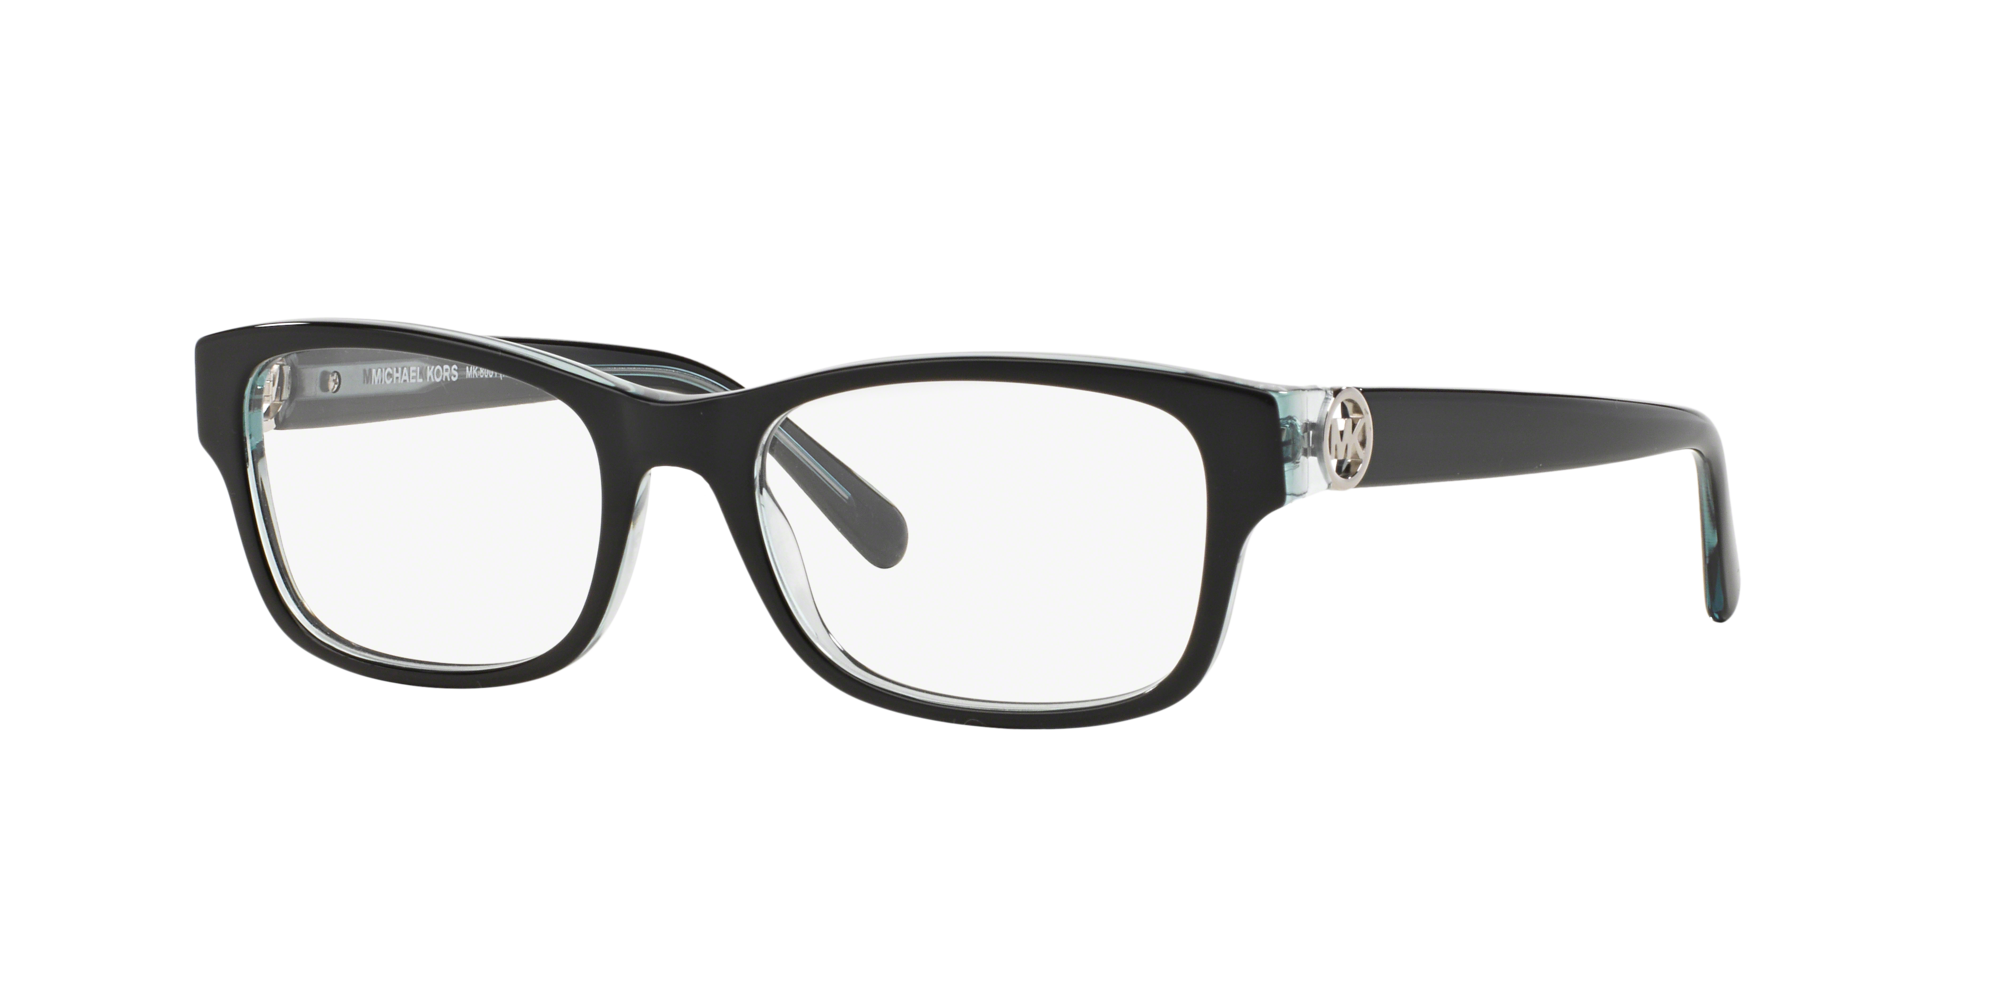 michael kors glasses lenscrafters